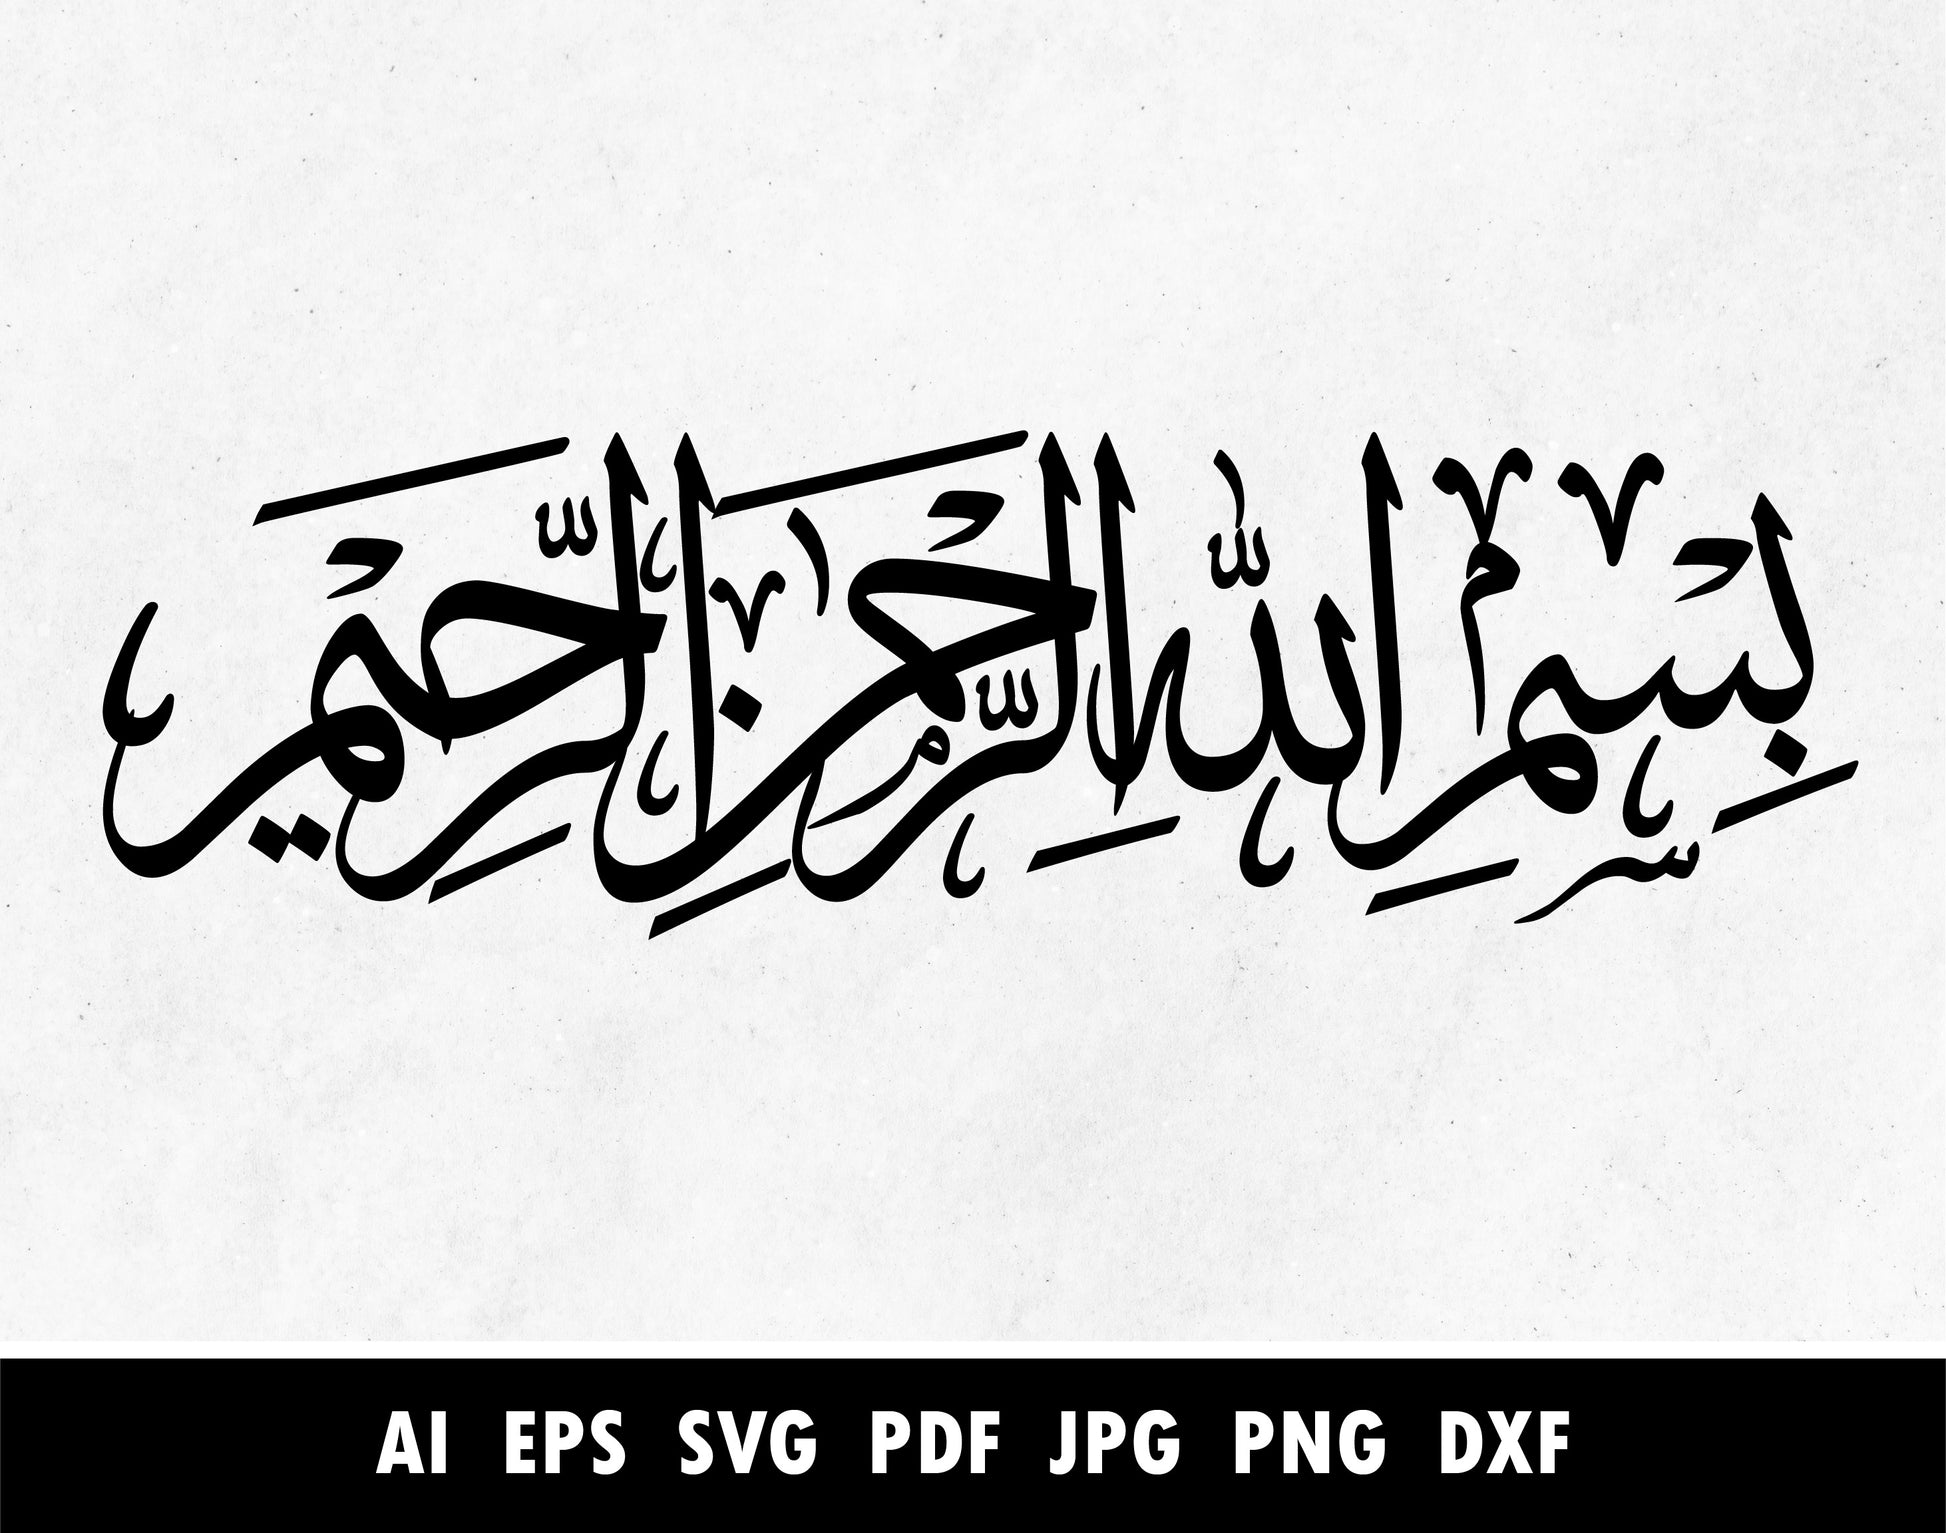 bismillah calligraphy vector